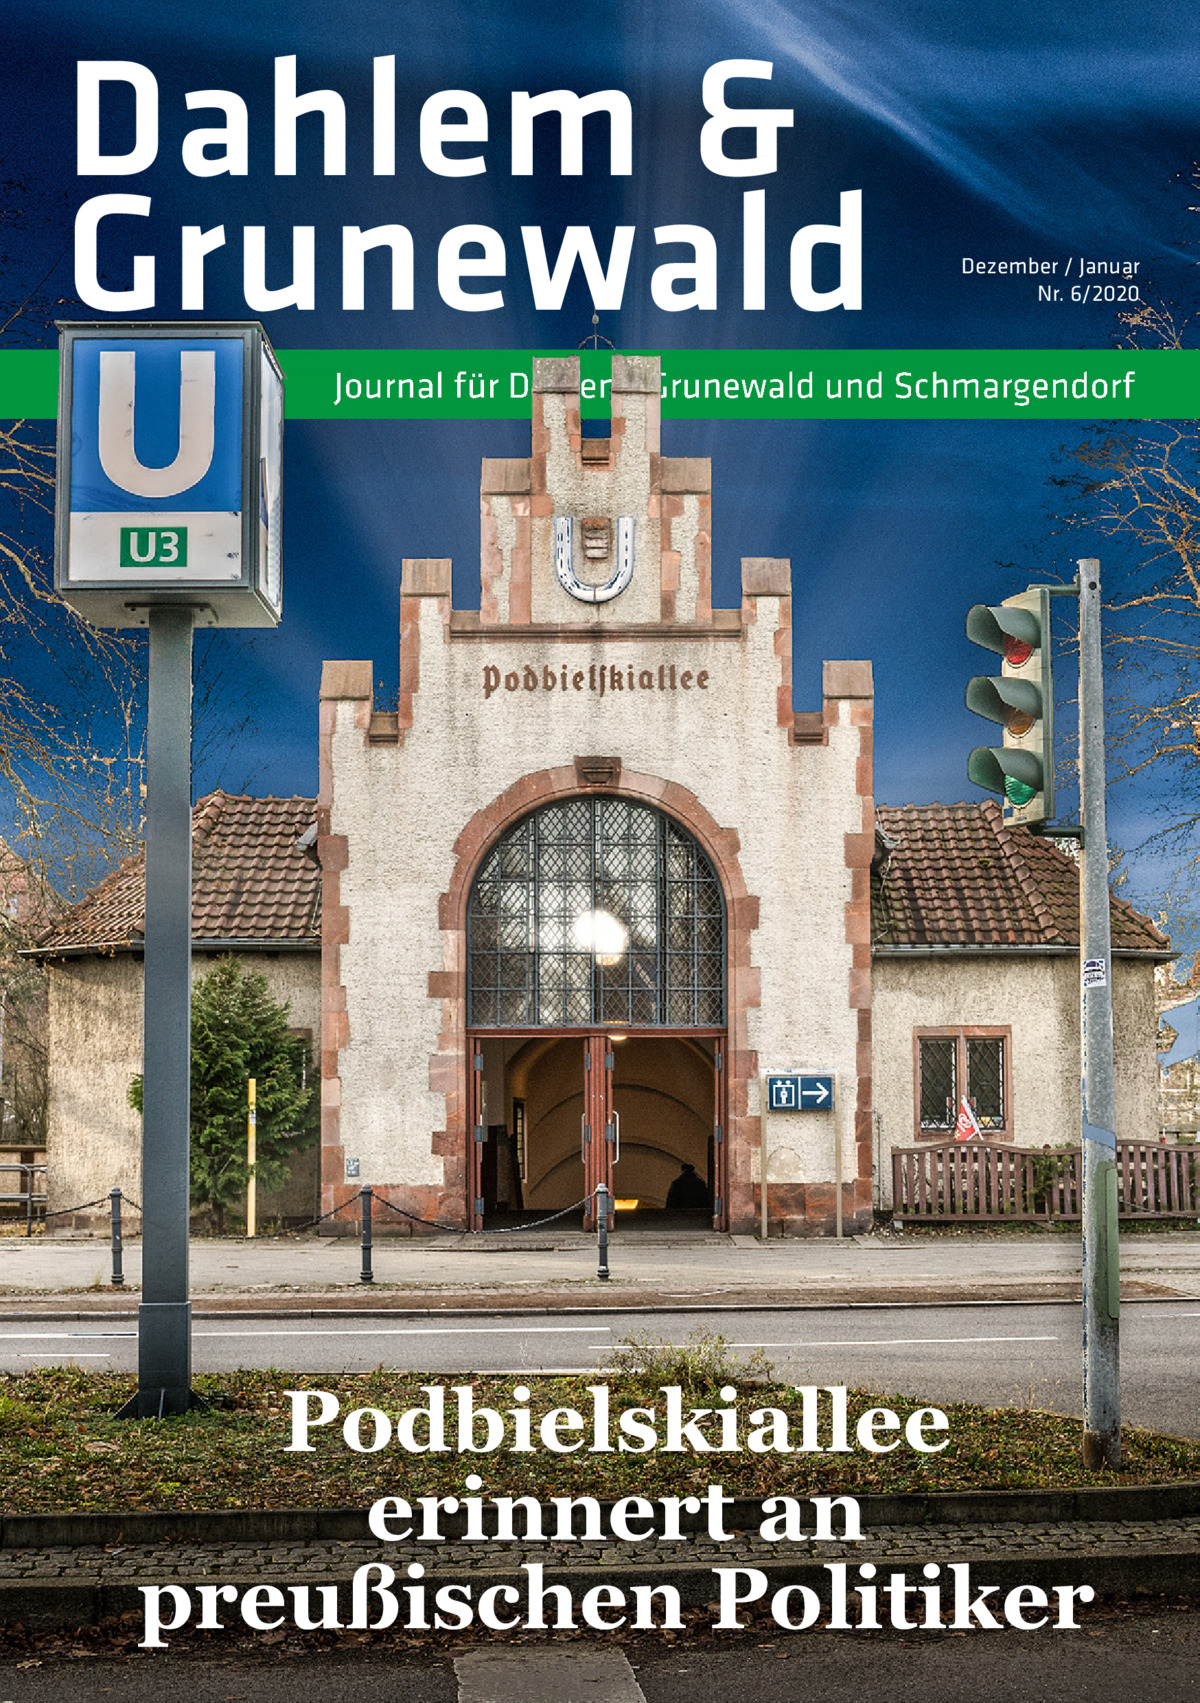 Dahlem & Grunewald  Dezember / Januar Nr. 6/2020  Journal für Dahlem, Grunewald und Schmargendorf  Podbielskiallee erinnert an preußischen Politiker